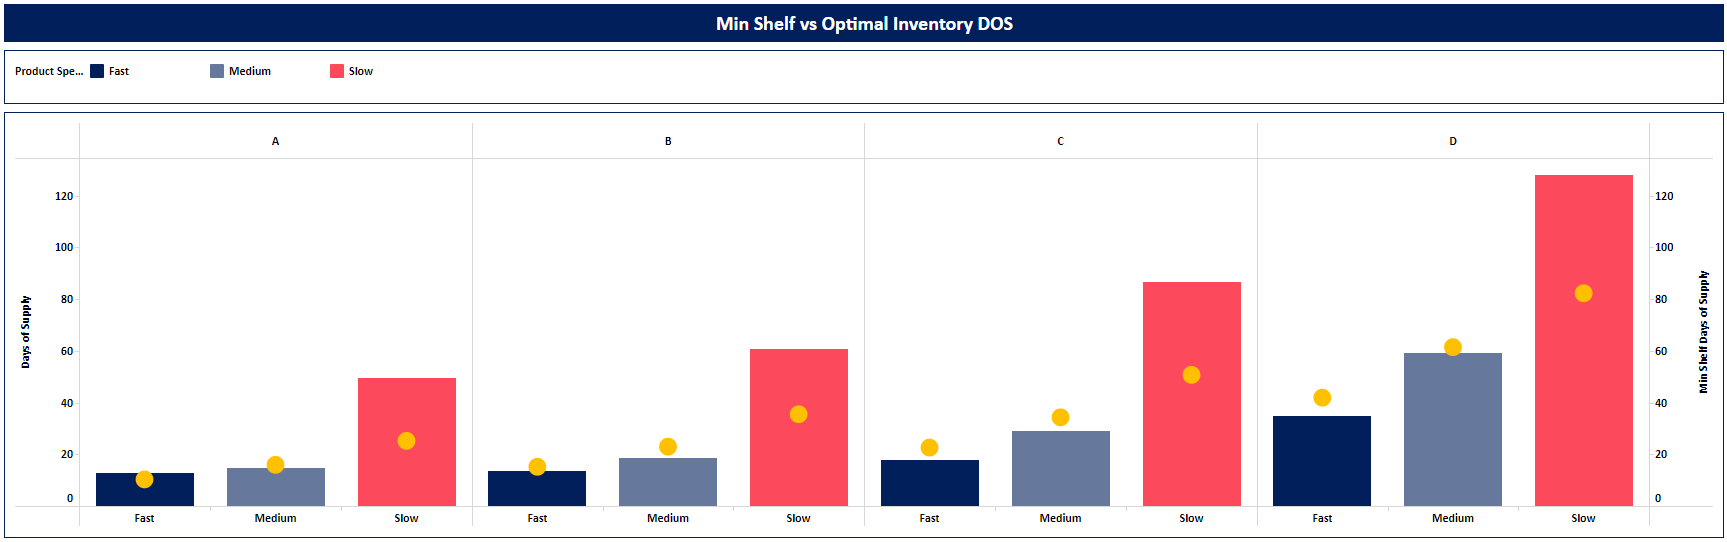 min shelf vs optimal inventory graph